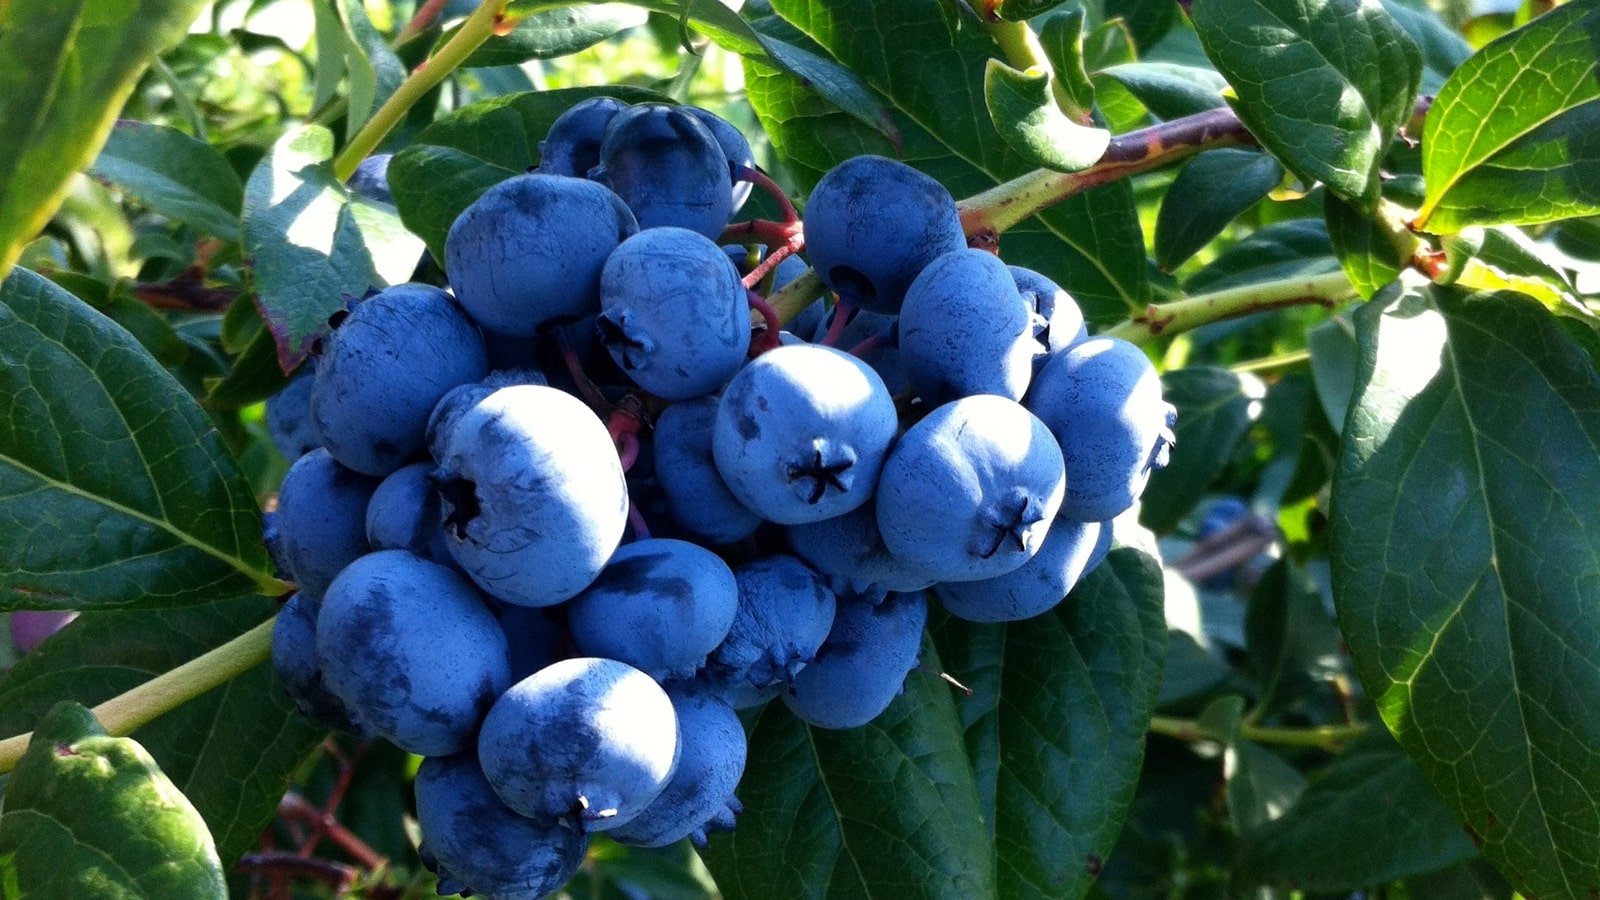 Blueberries on vine in Muskoka, ON region